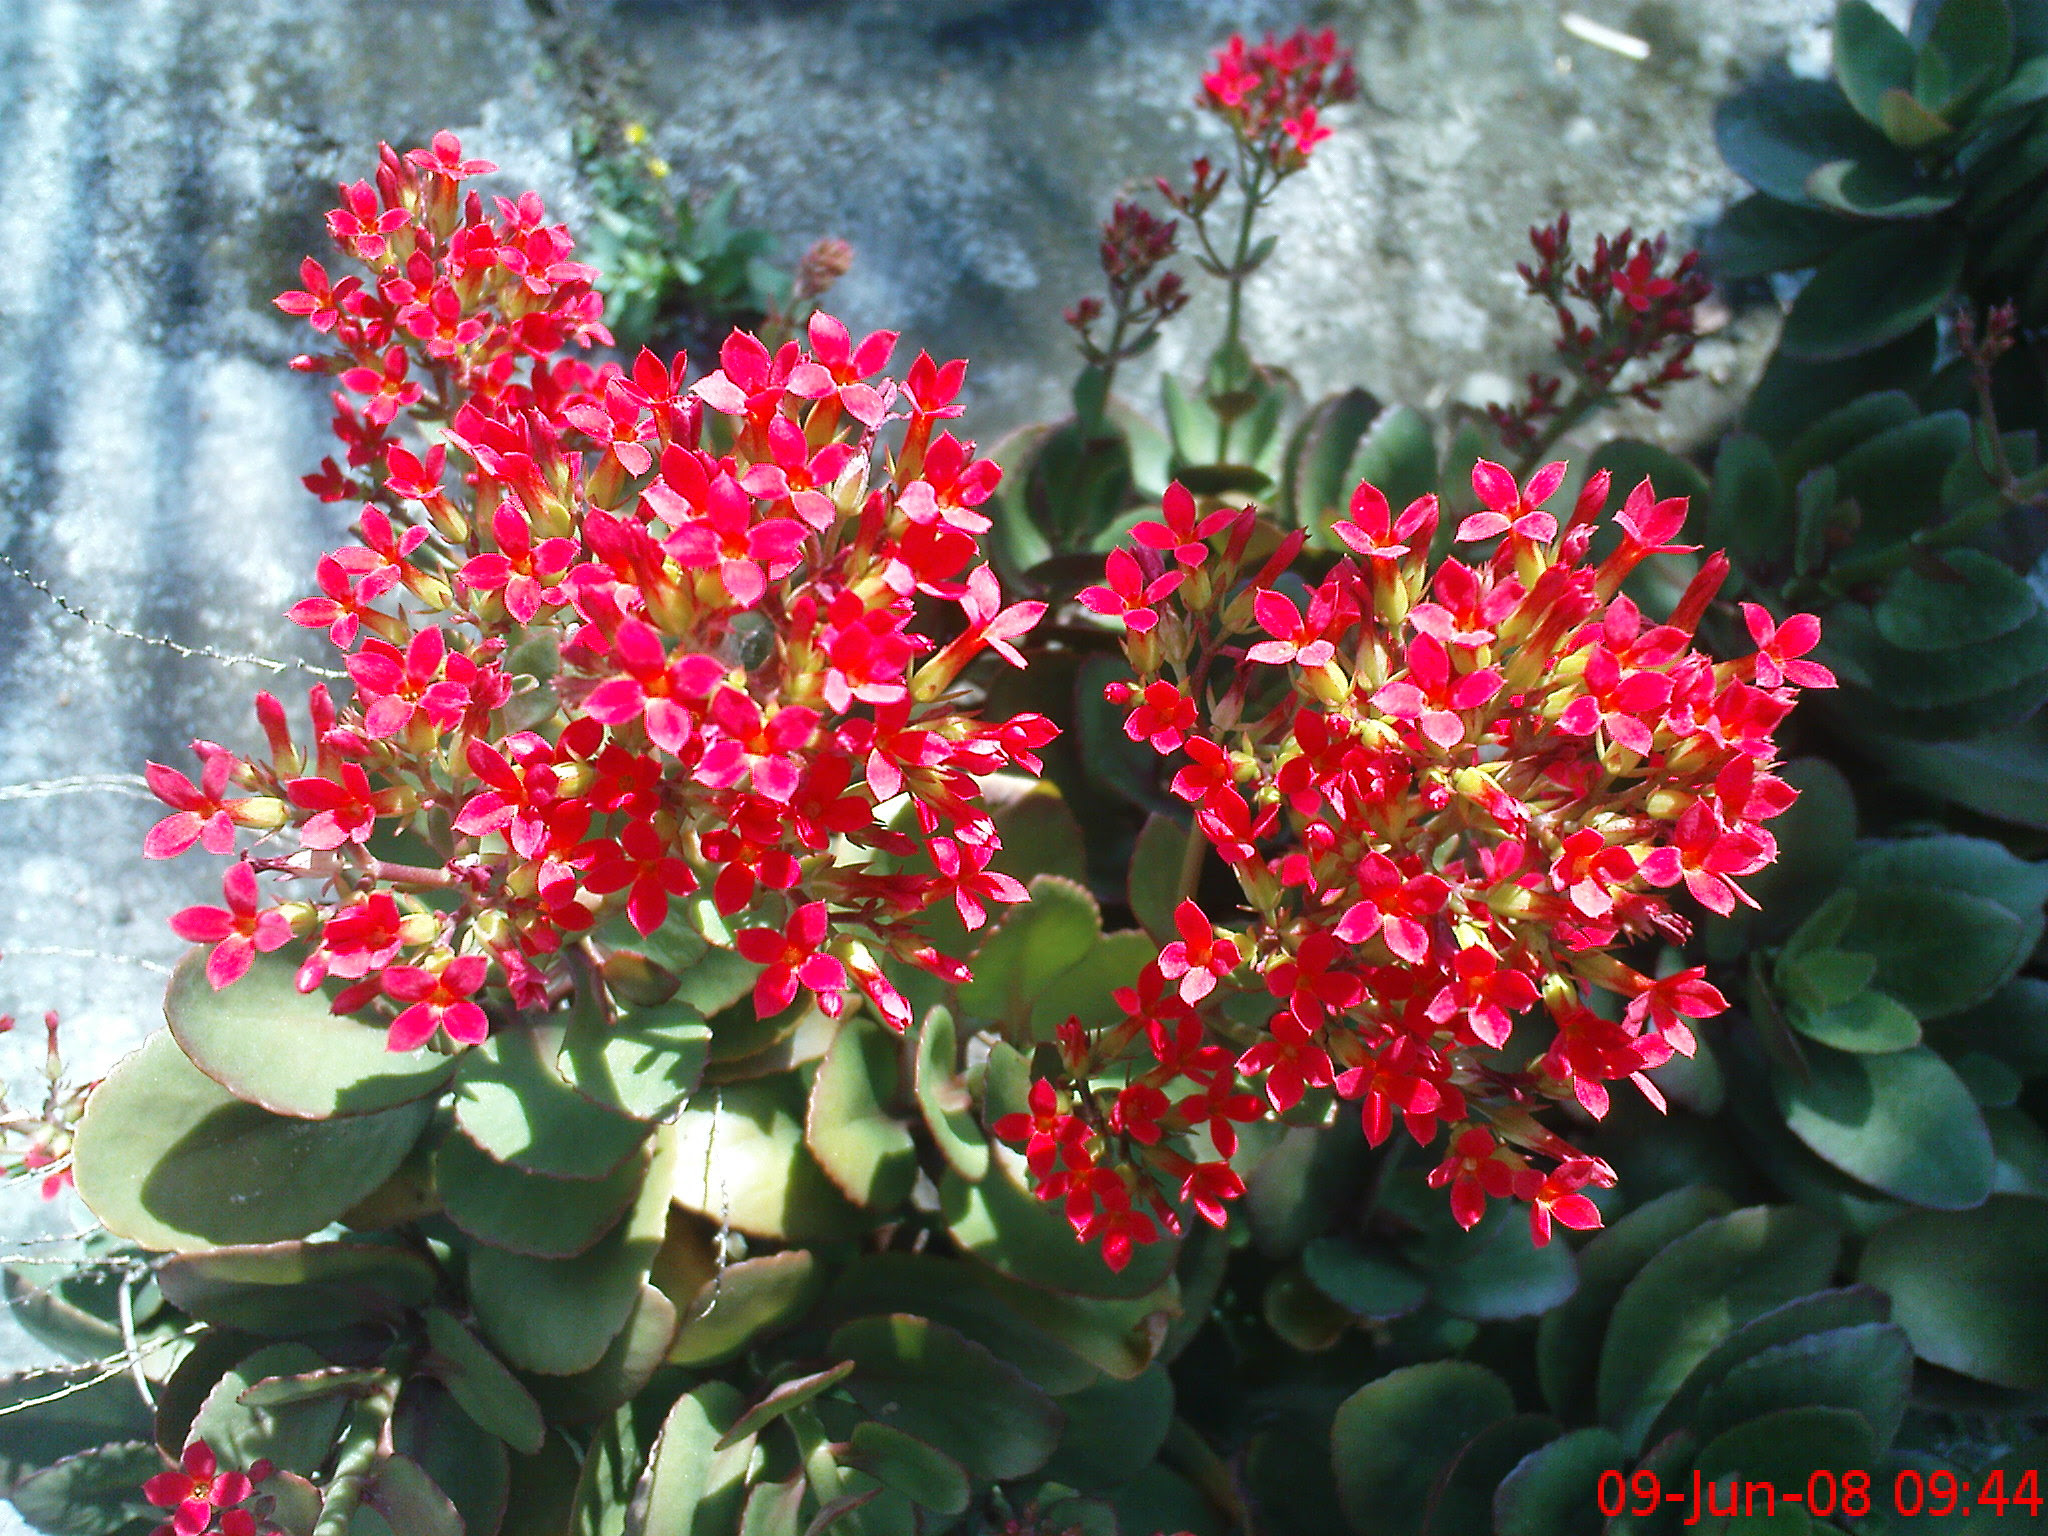 Contoh Foto Bunga Cocor Bebek Kumpulan Gambar Bunga